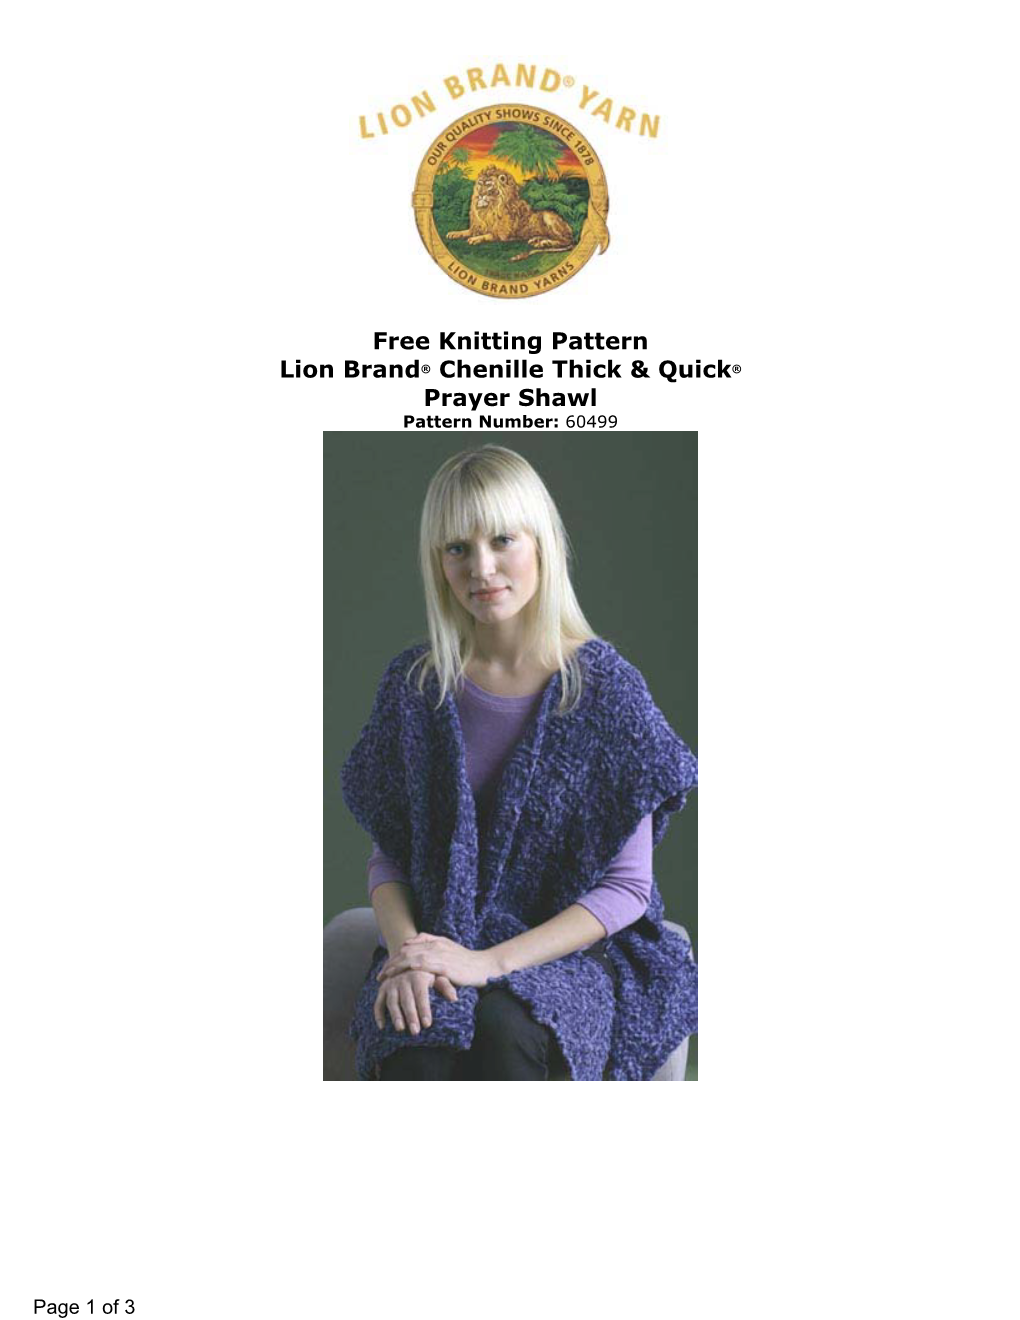 Free Knitting Pattern Lion Brand® Chenille Thick & Quick® Prayer